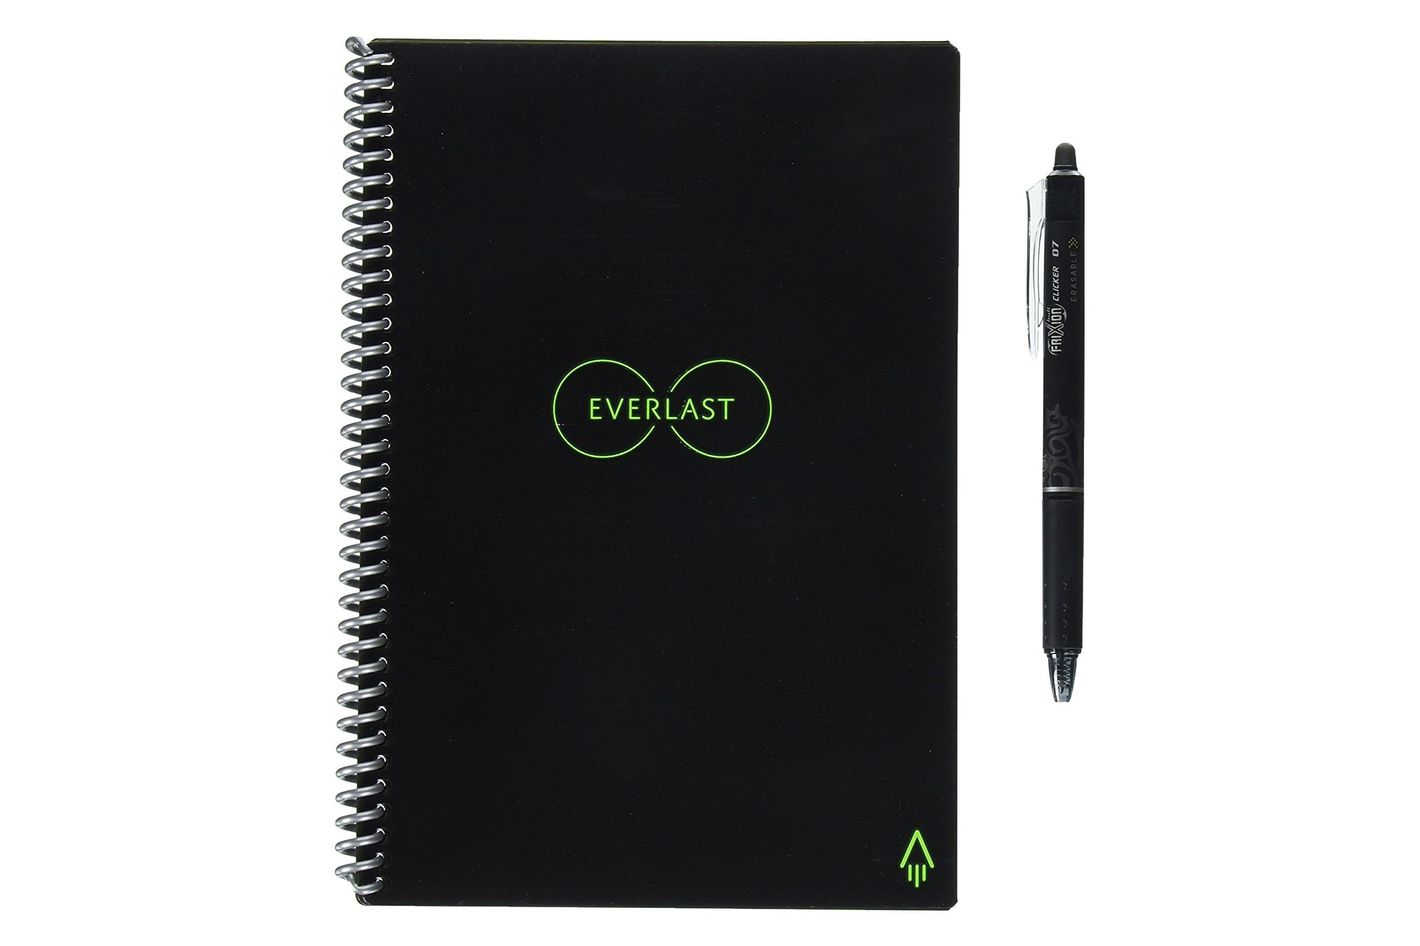 Rocketbook Everlast Reusable Smart Notebook Review 2018 | The 